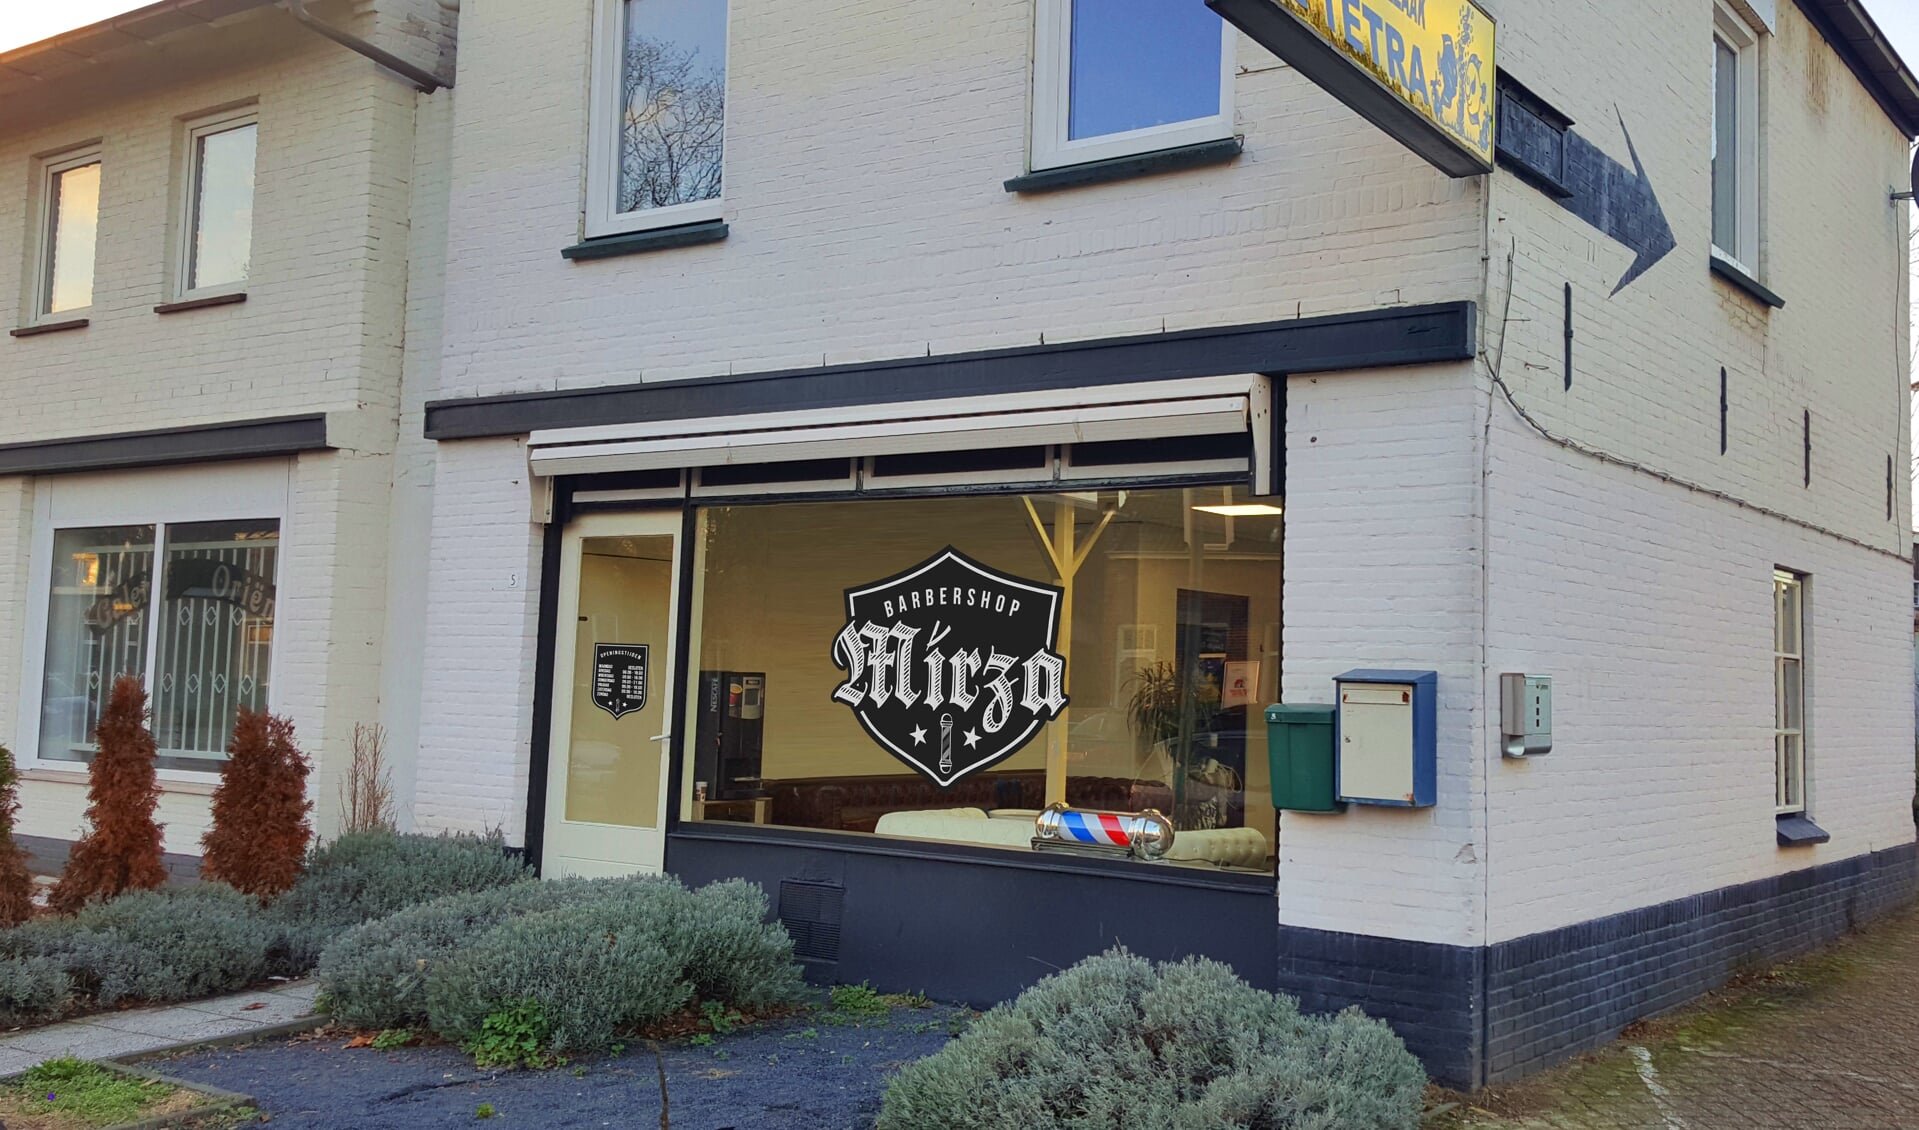 Barbershop Mirza geopend aan de Kromstraat 